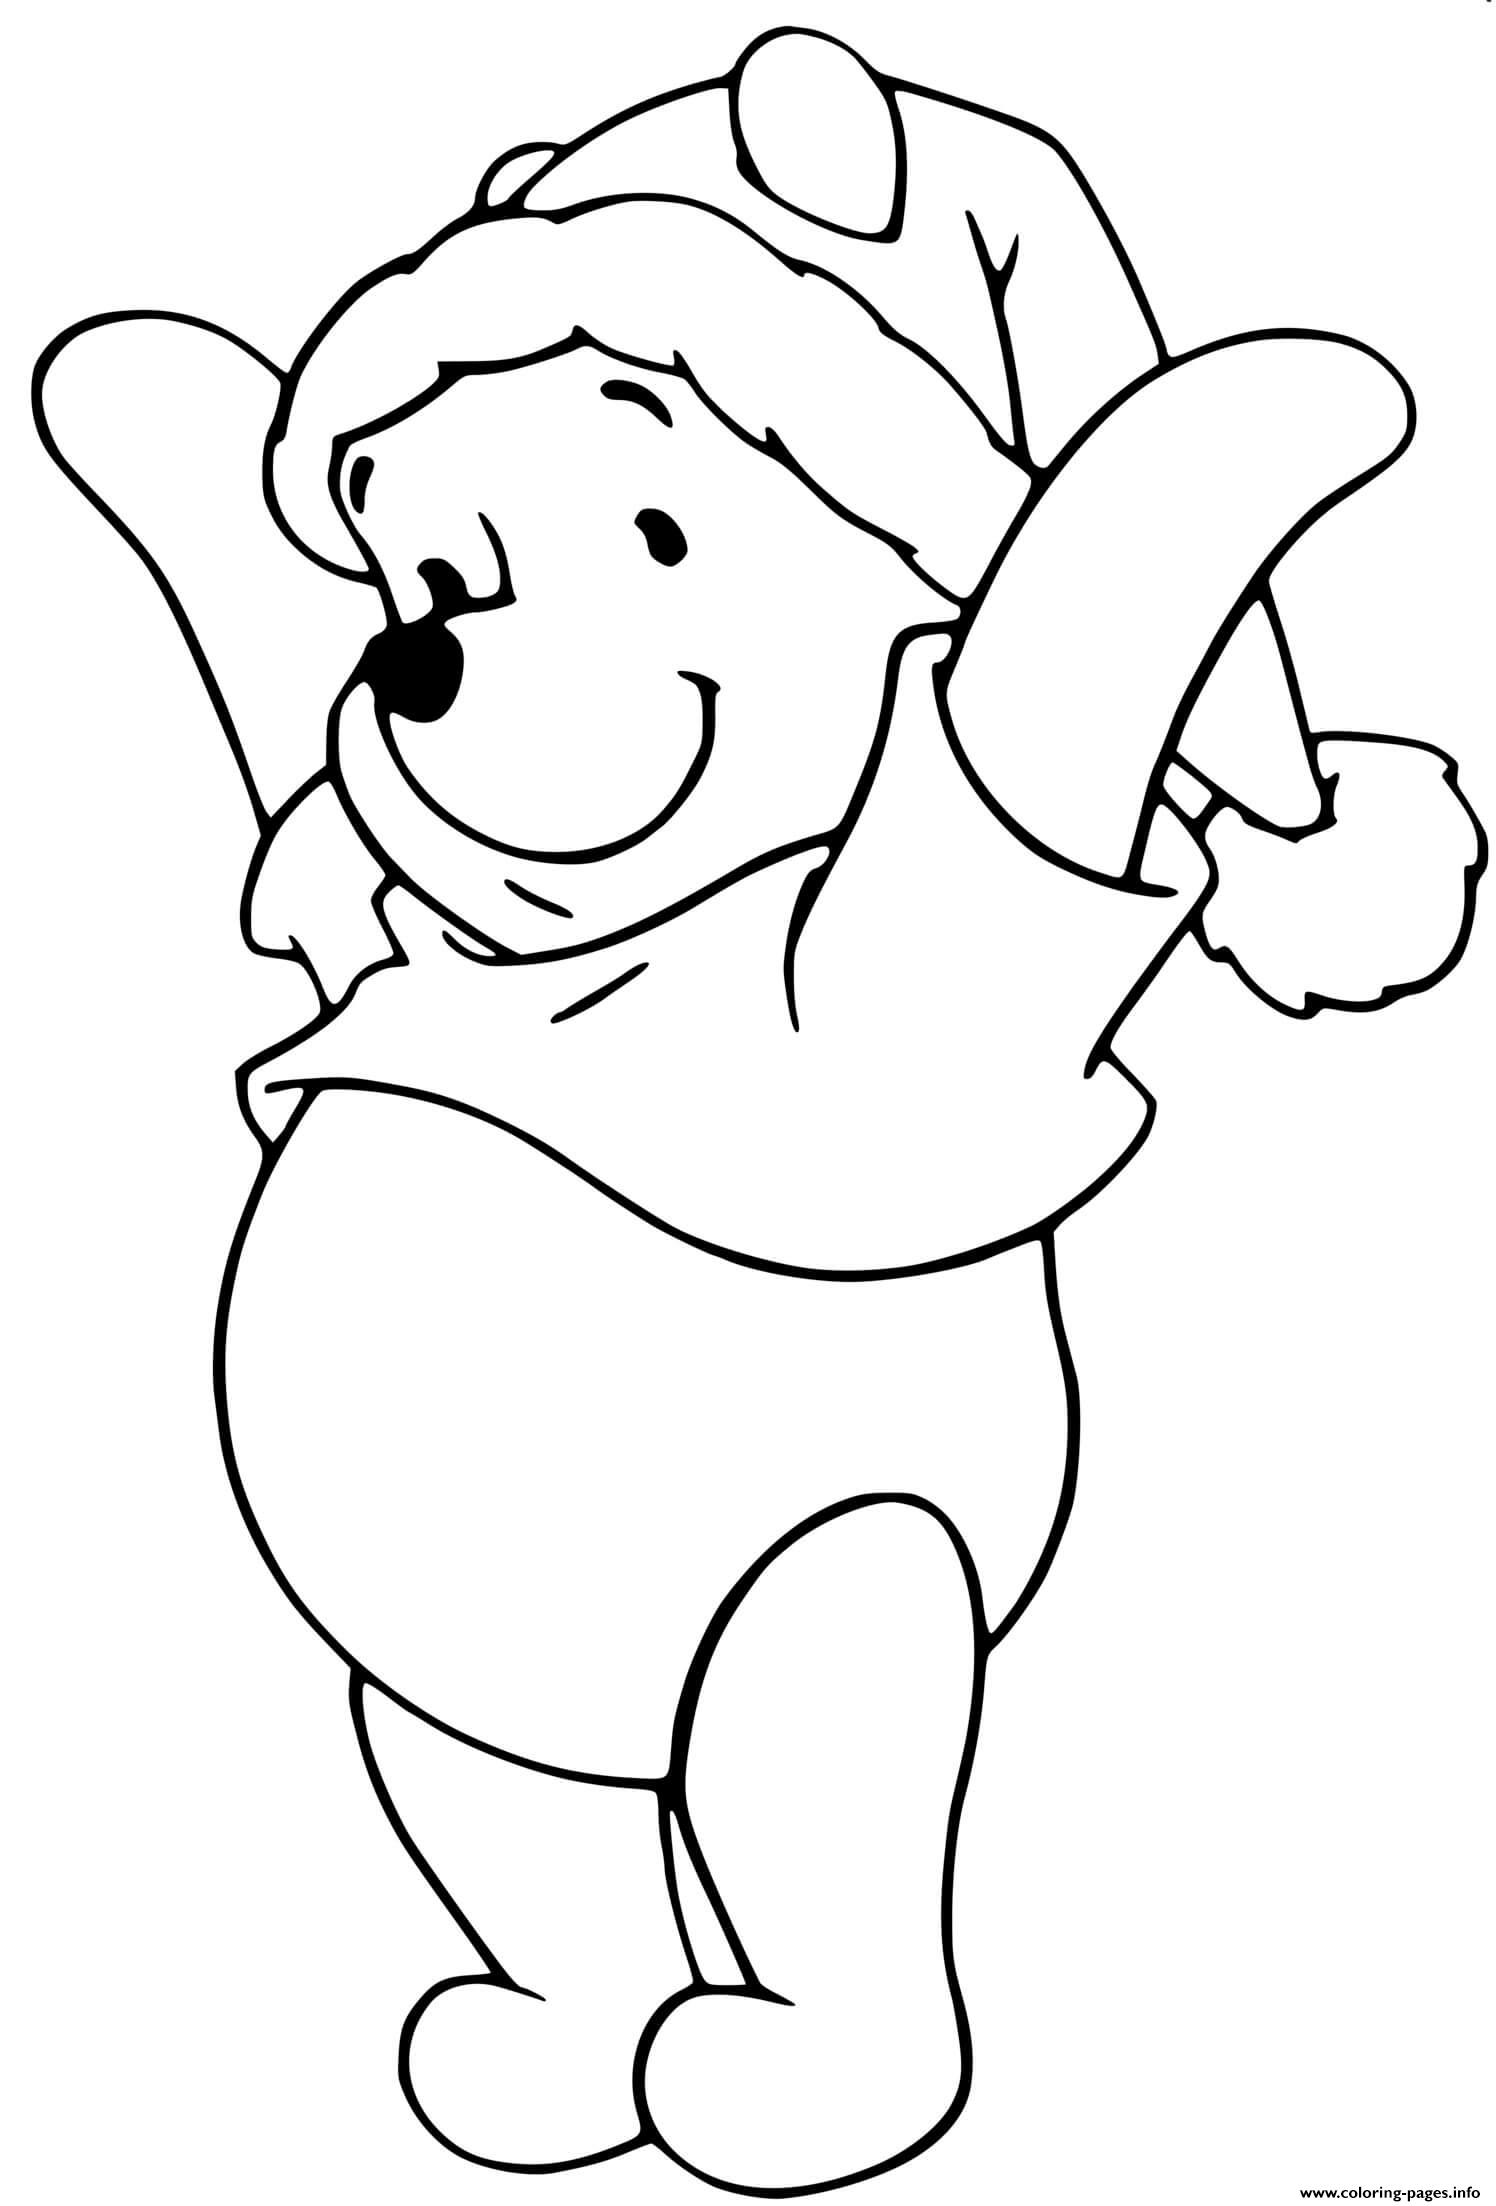 Winnie The Pooh As Santa Claus coloring